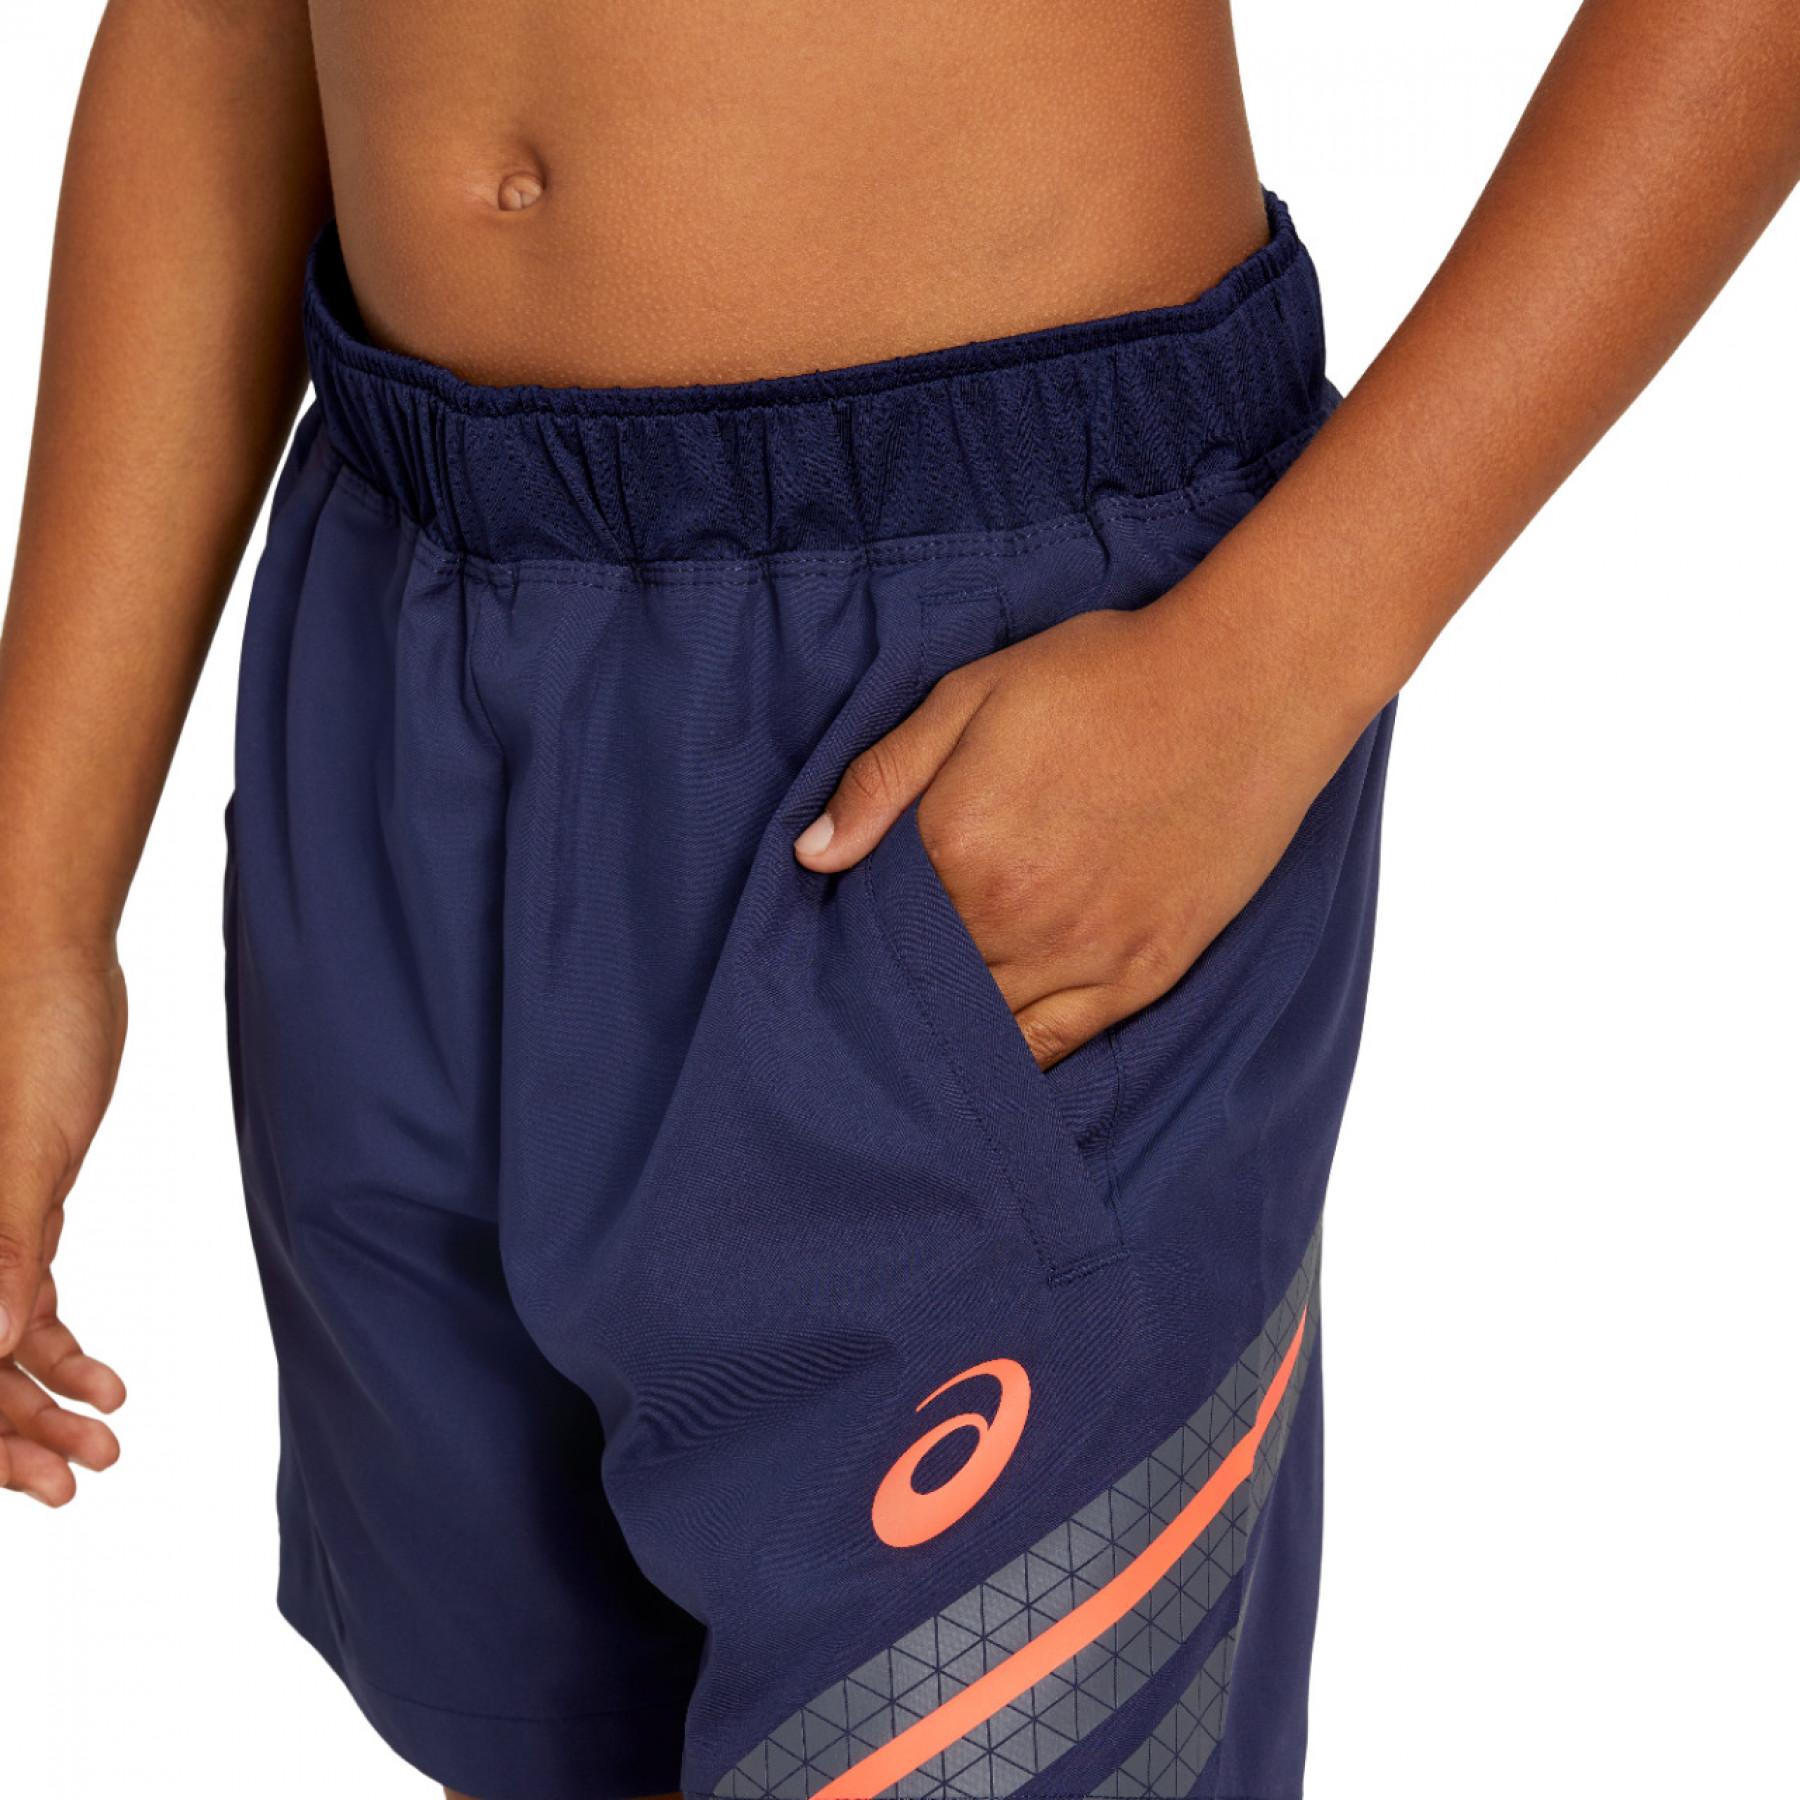 Children's shorts Asics Club B Gpx